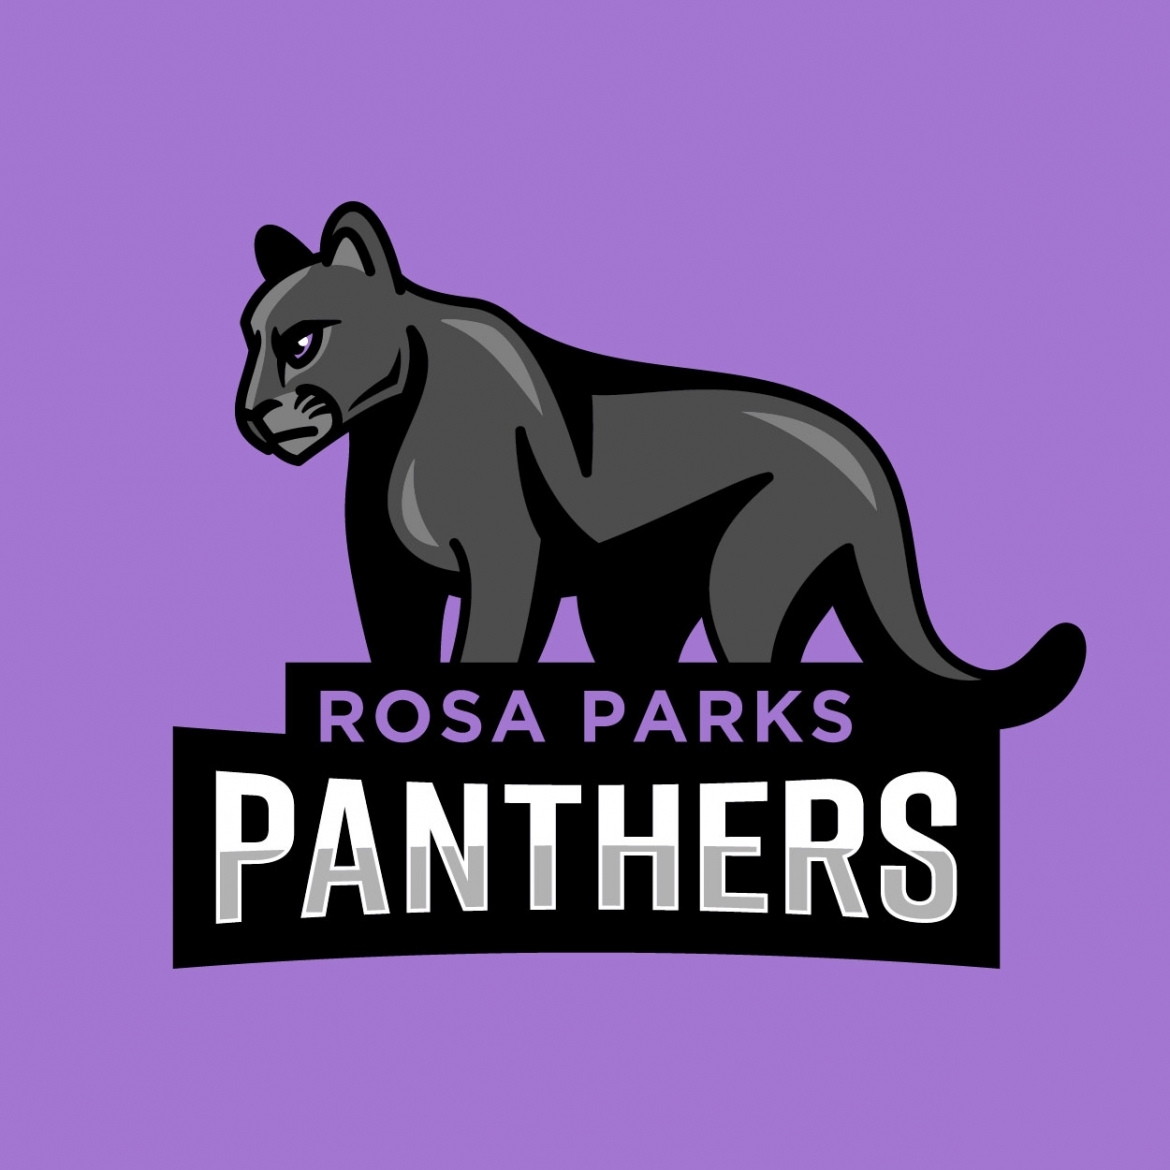 Rosa Parks Panthers logo